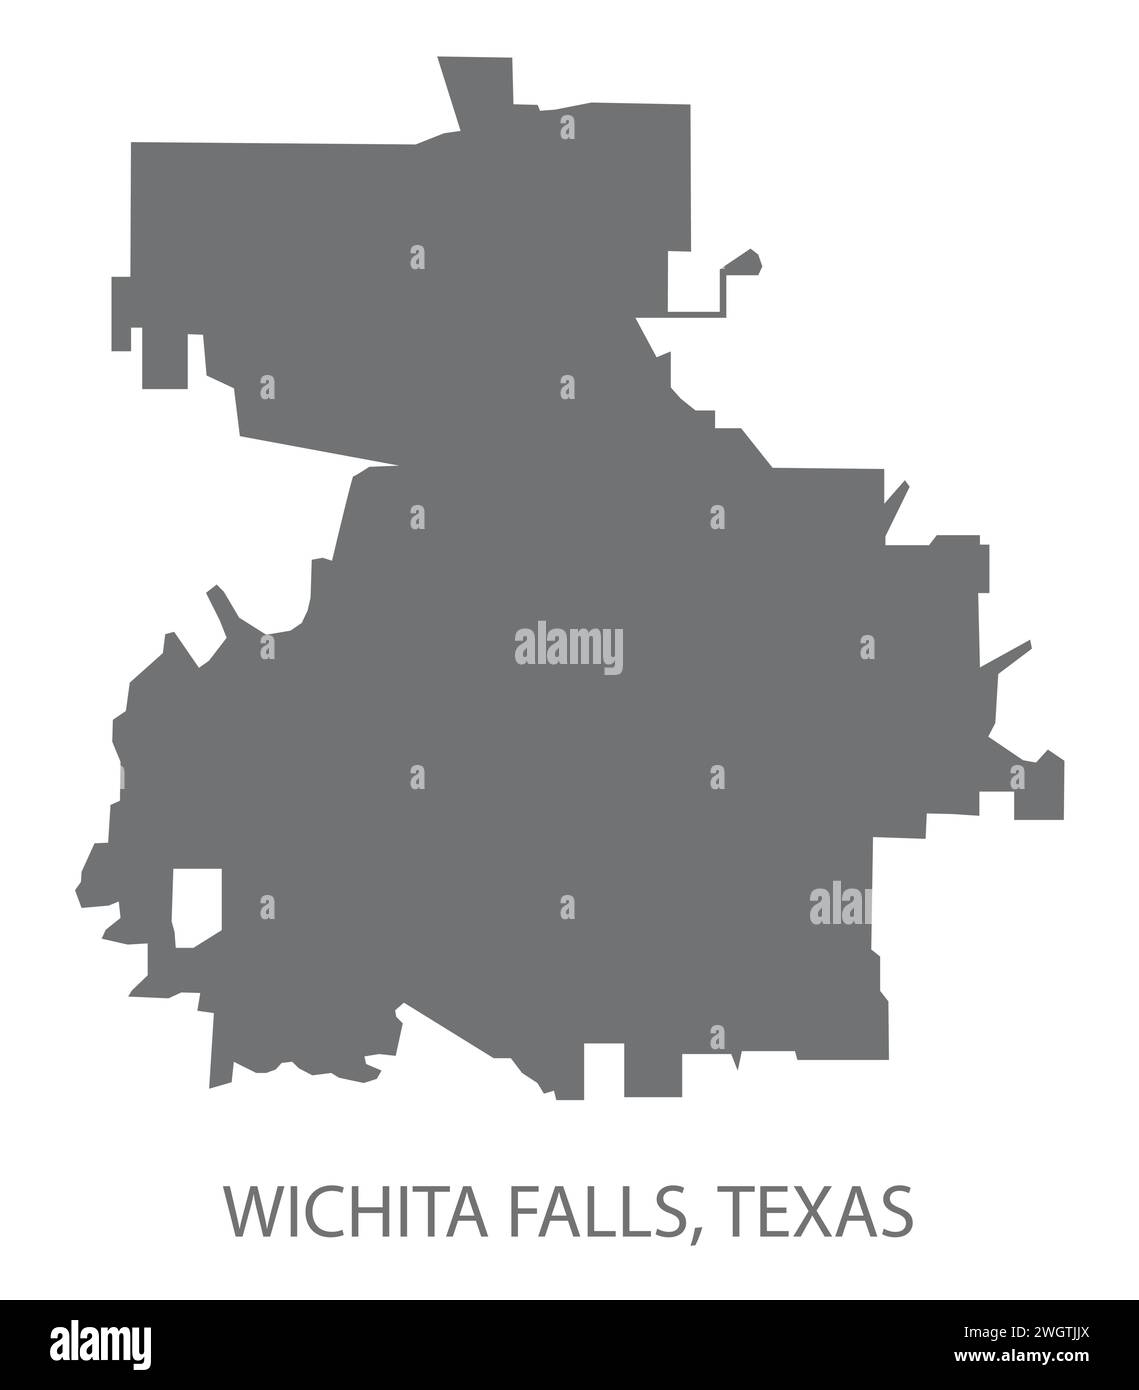 Wichita Falls Texas USA city map grey illustration silhouette shape Stock Vector